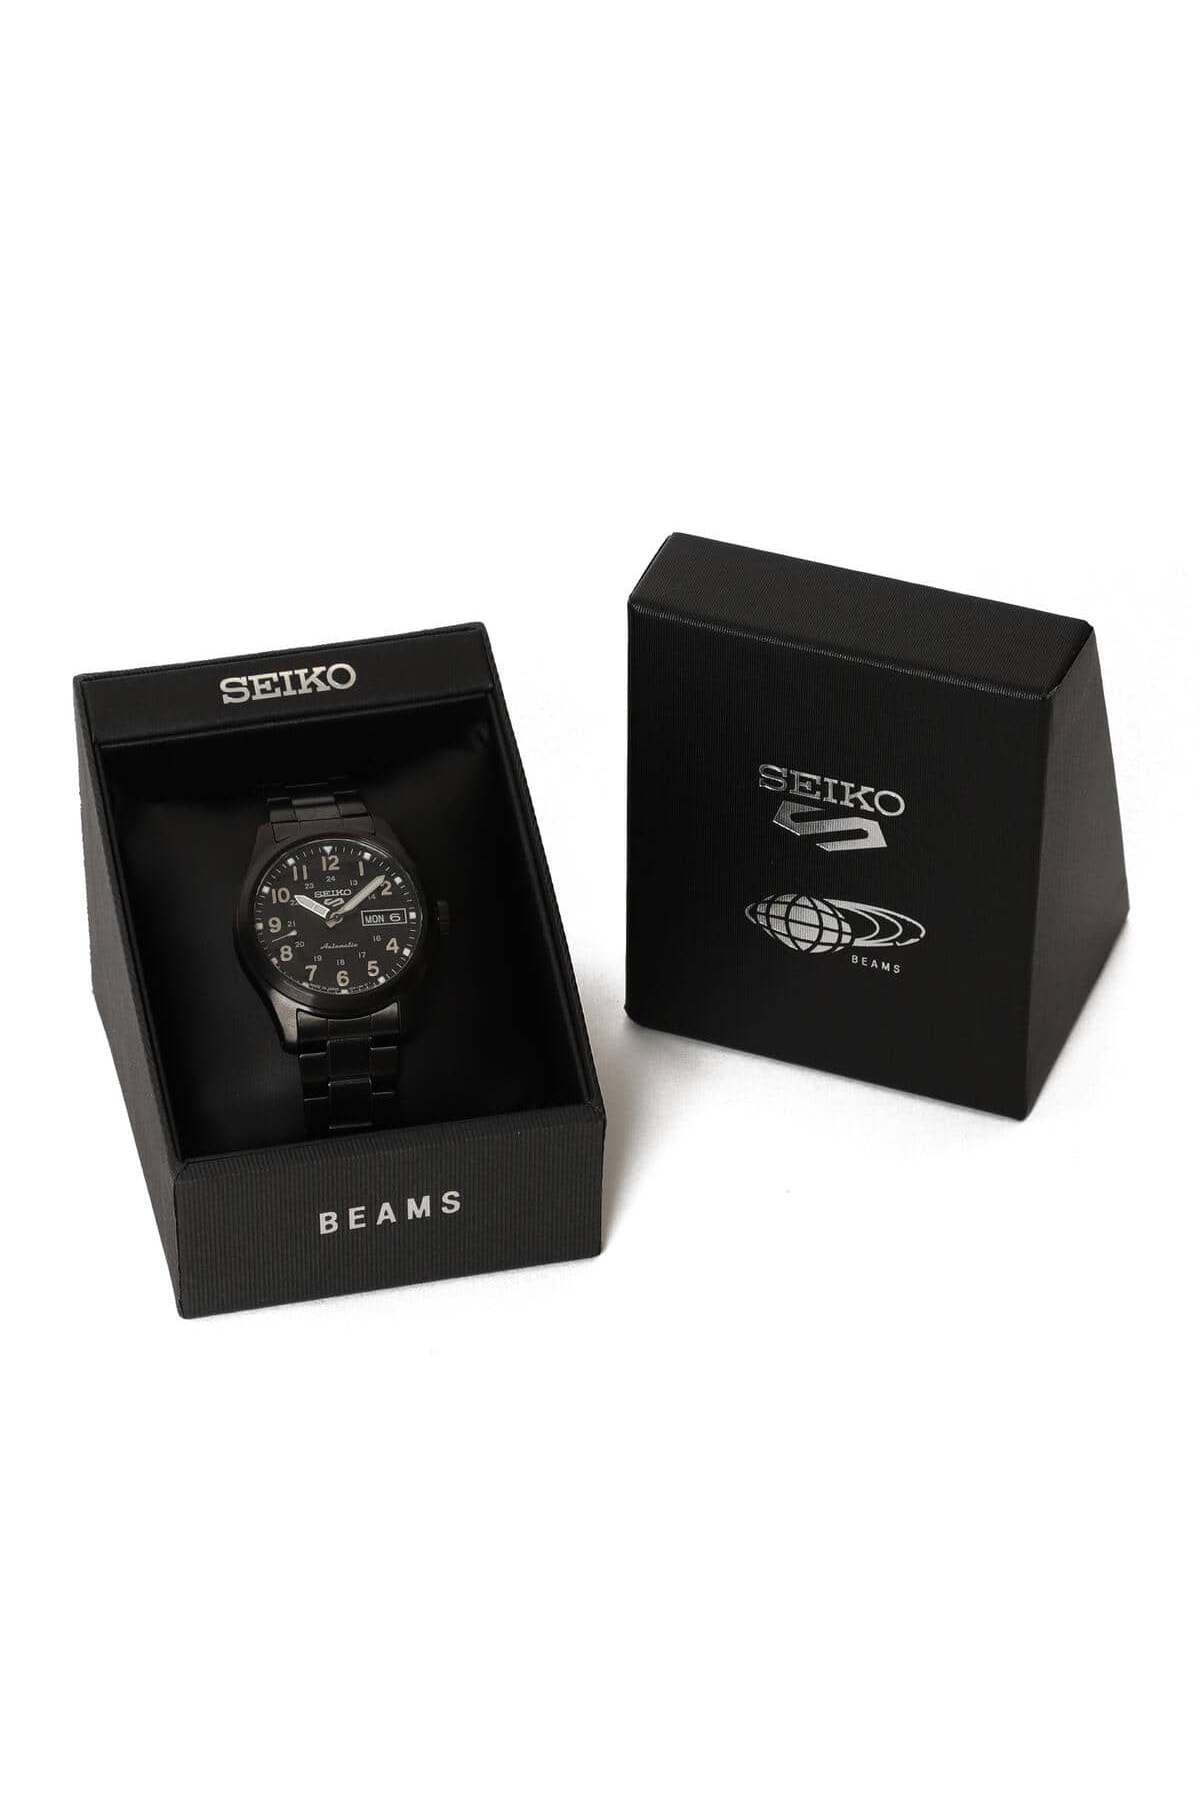 Seiko 5 Sports x BEAMS 全新聯乘錶款正式發佈